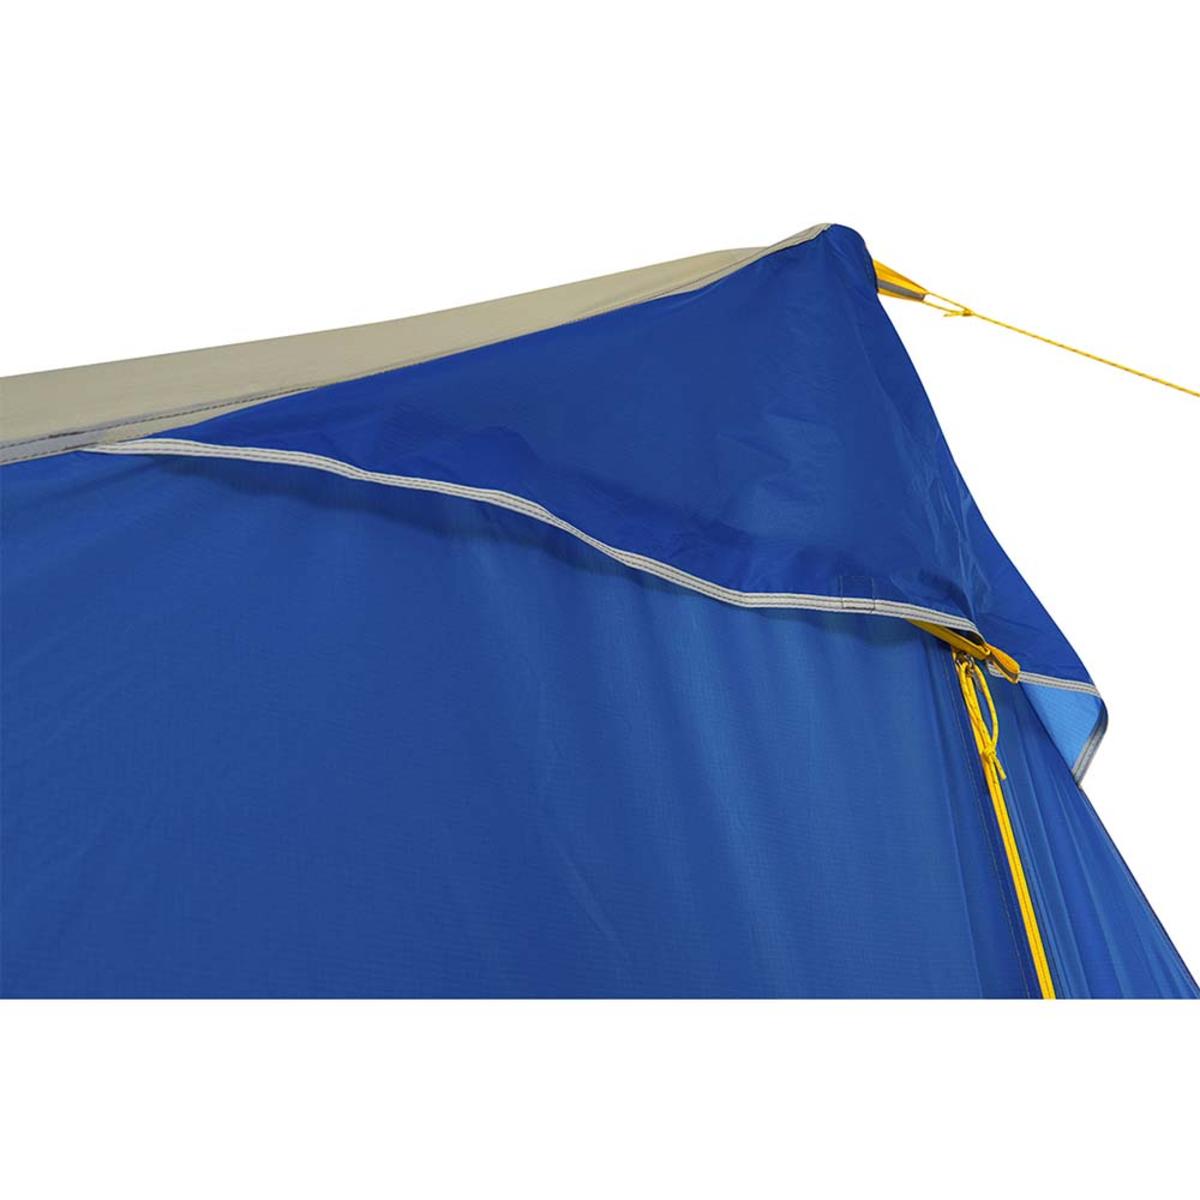 Sierra Designs High Route 1 Person Tent